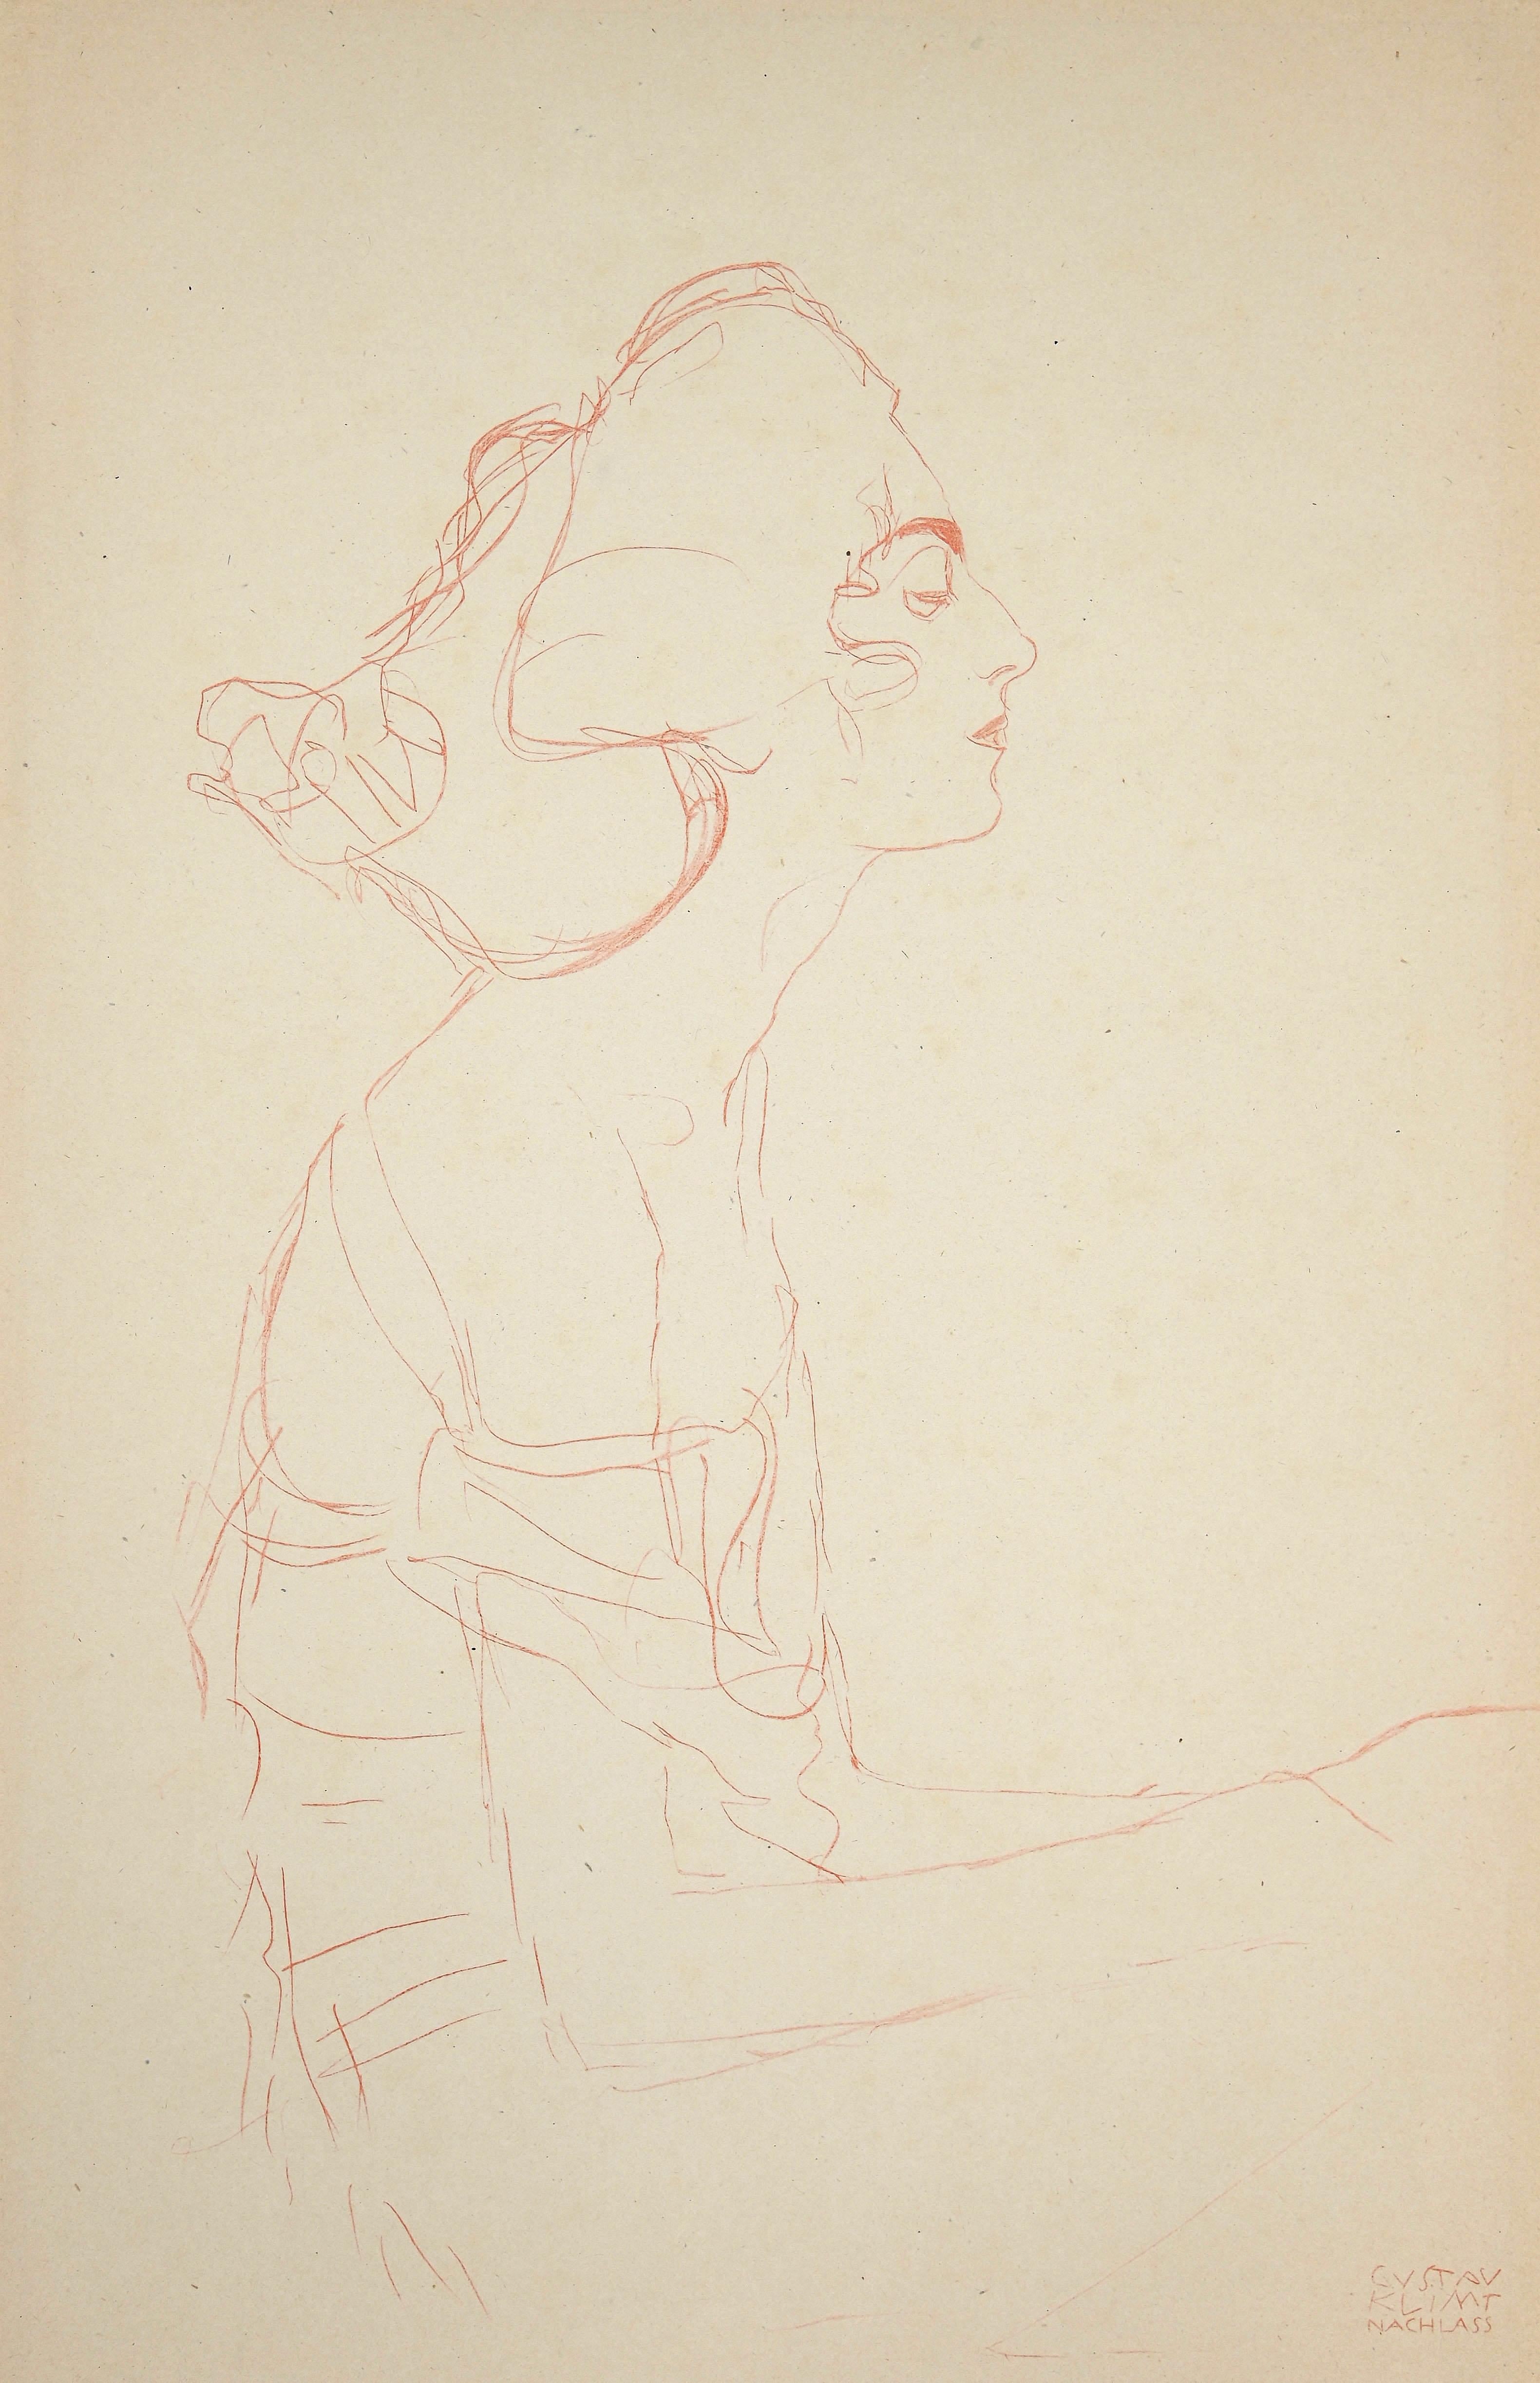 (after) Gustav Klimt Figurative Print - Study of a Bust (Red pencil)  - Original Collotype Print after G. Klimt - 1919